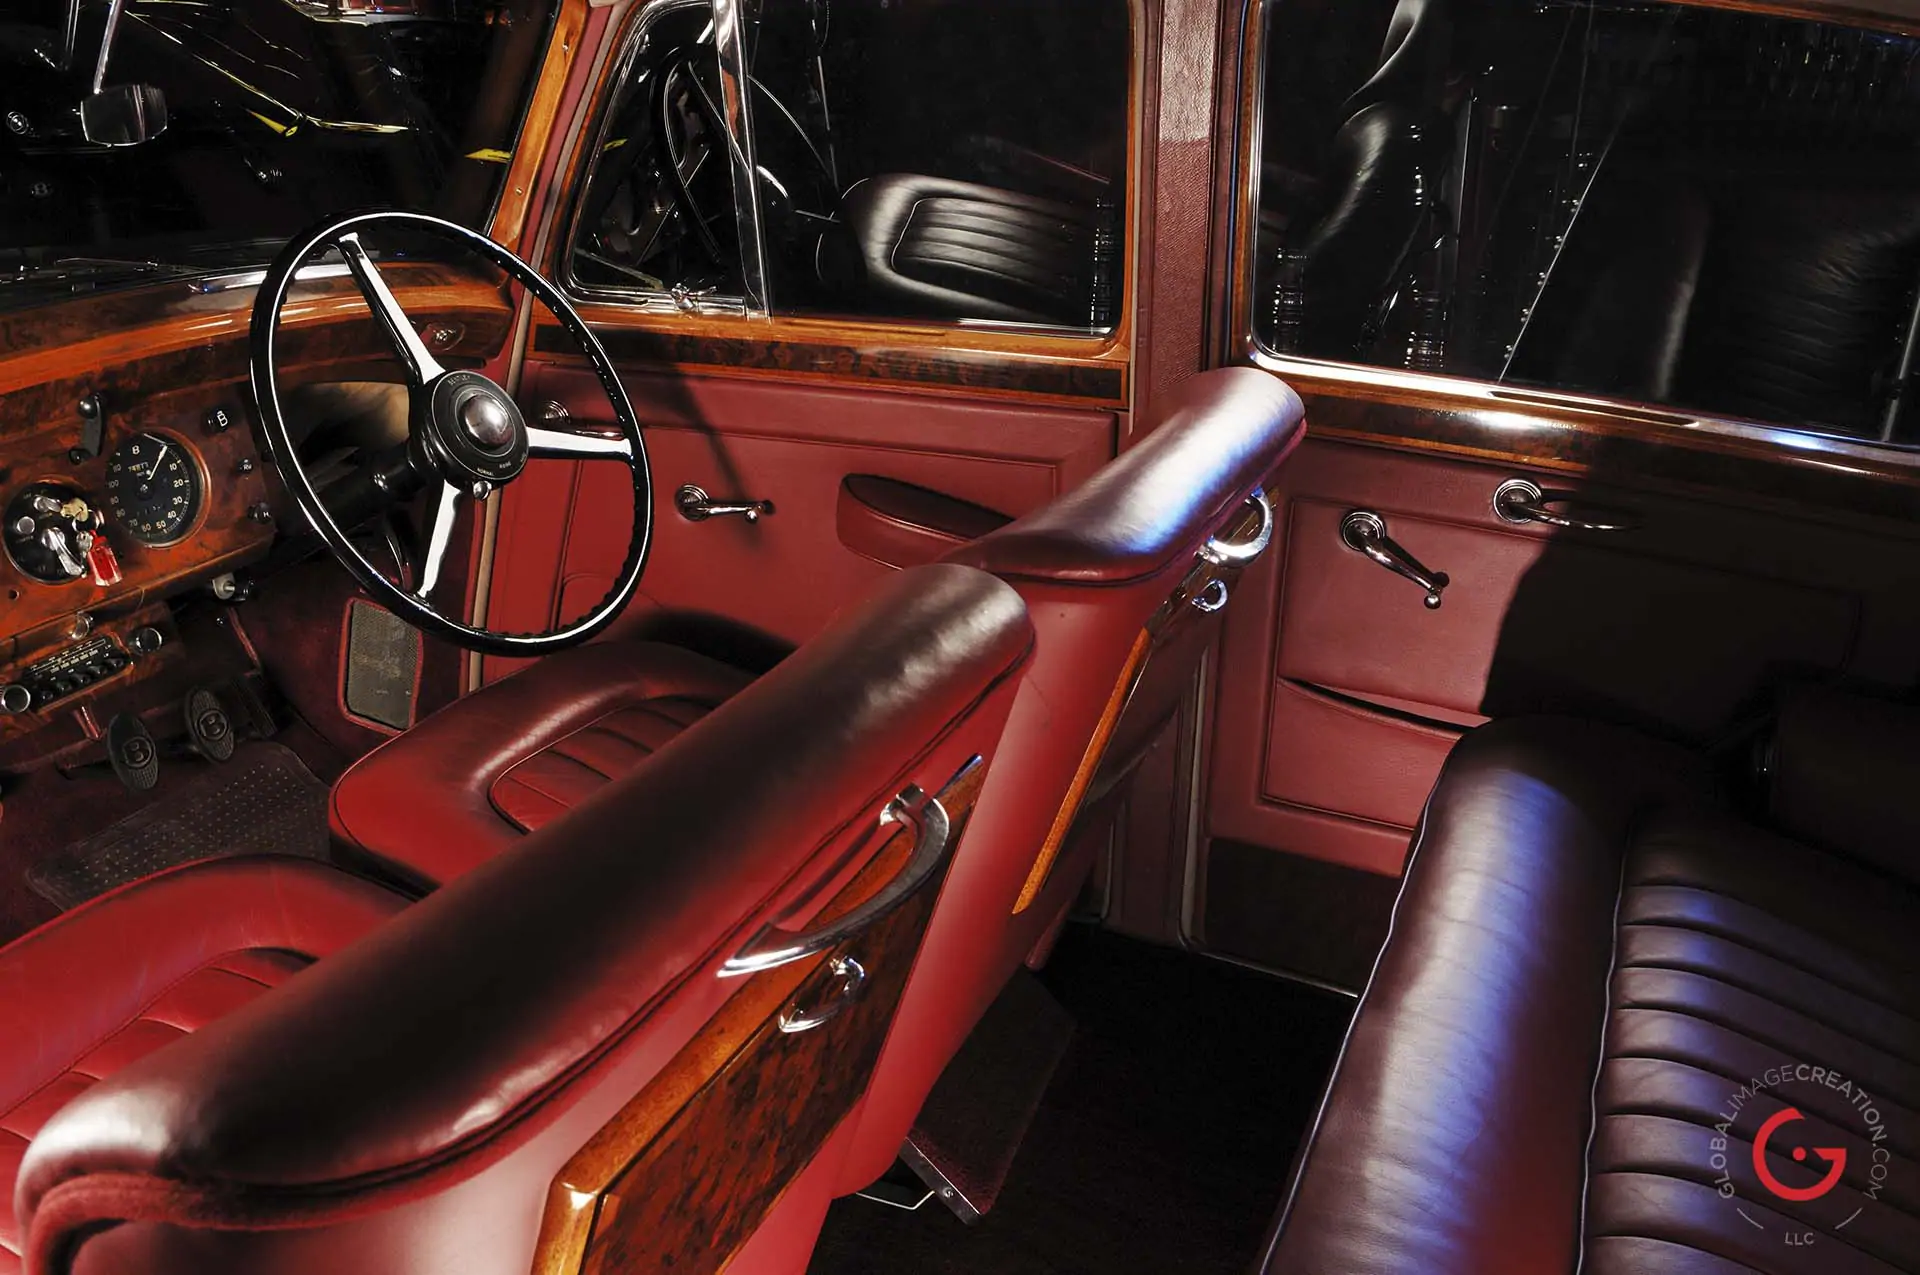 Classic Bentley Interior - Professional Car Photographer, Automotive Photography